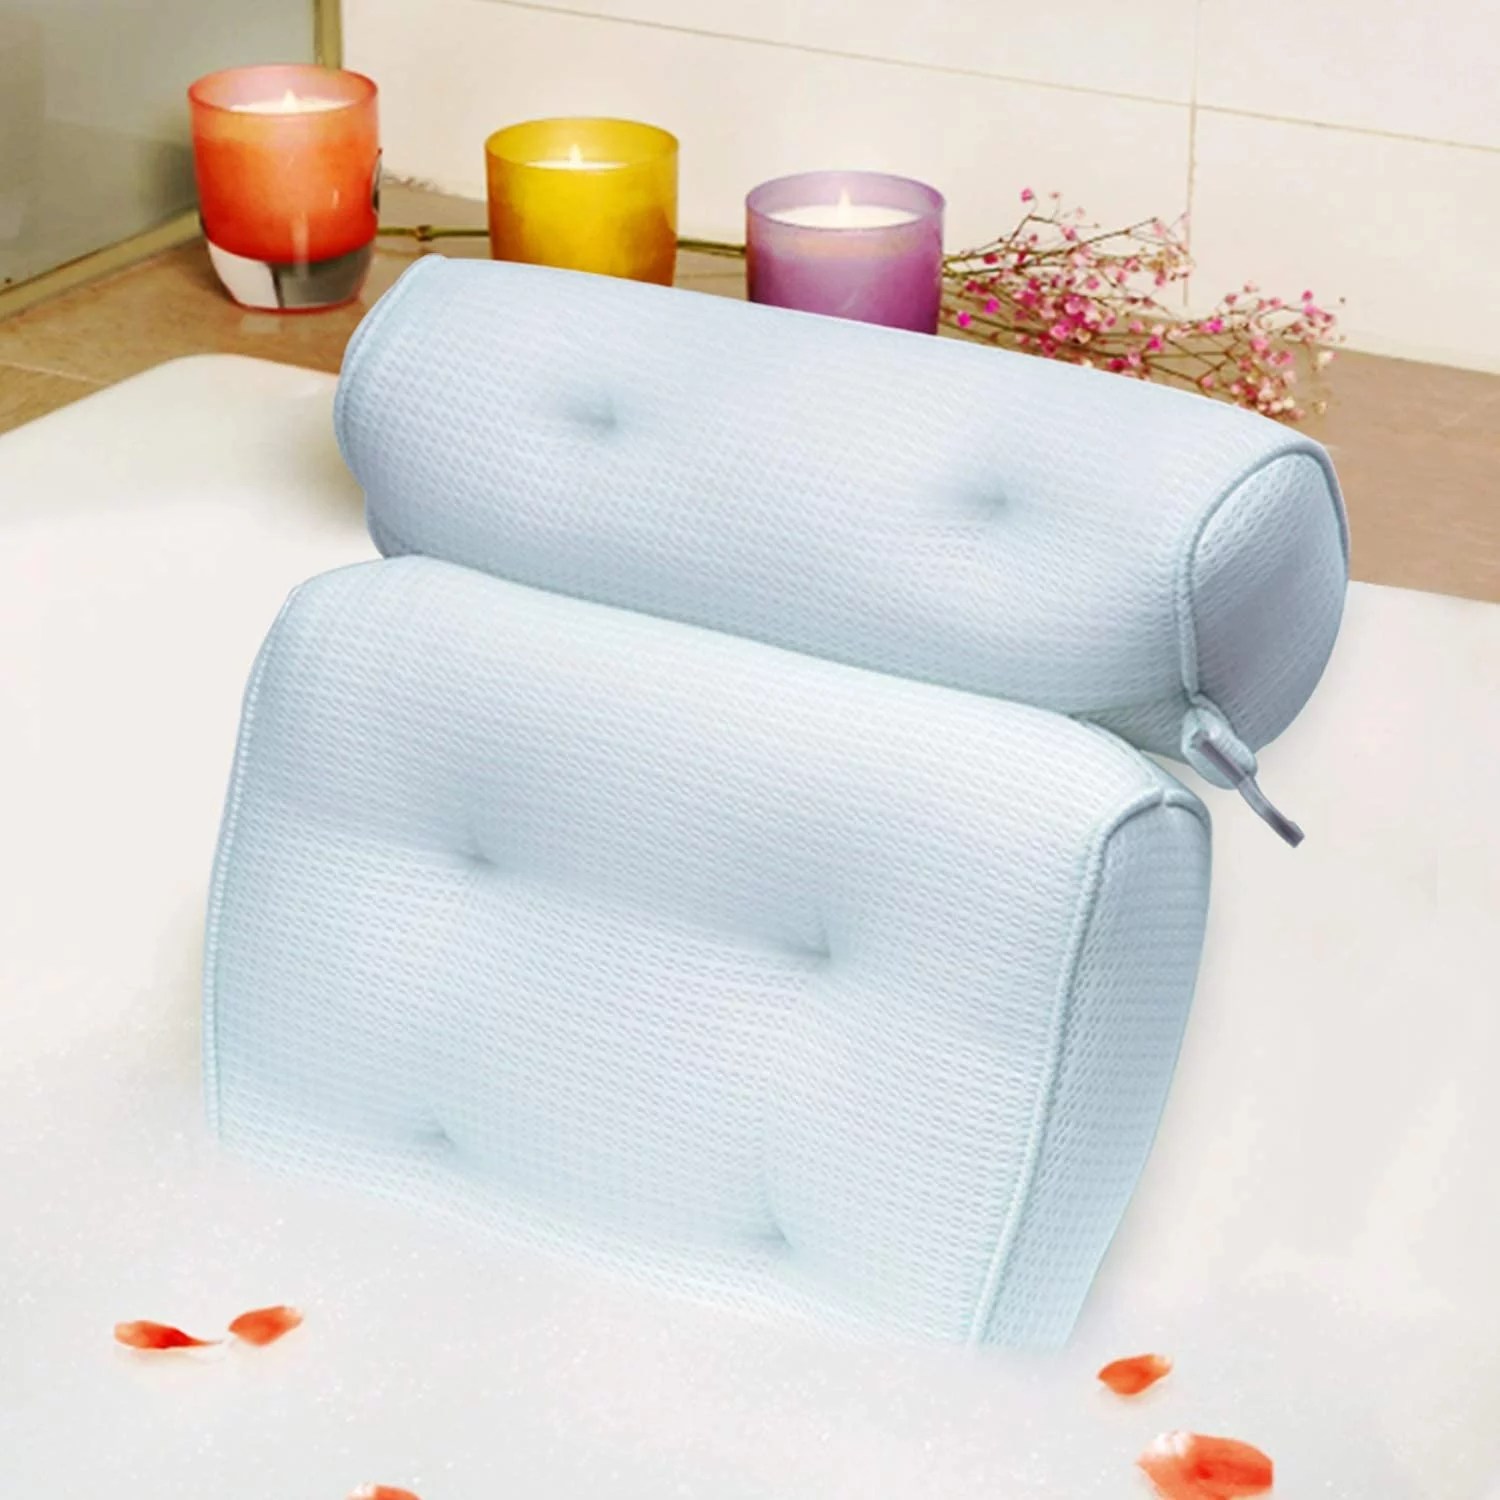  KANDOONA Bath Pillow (Extra Soft) - Bathtub Pillow